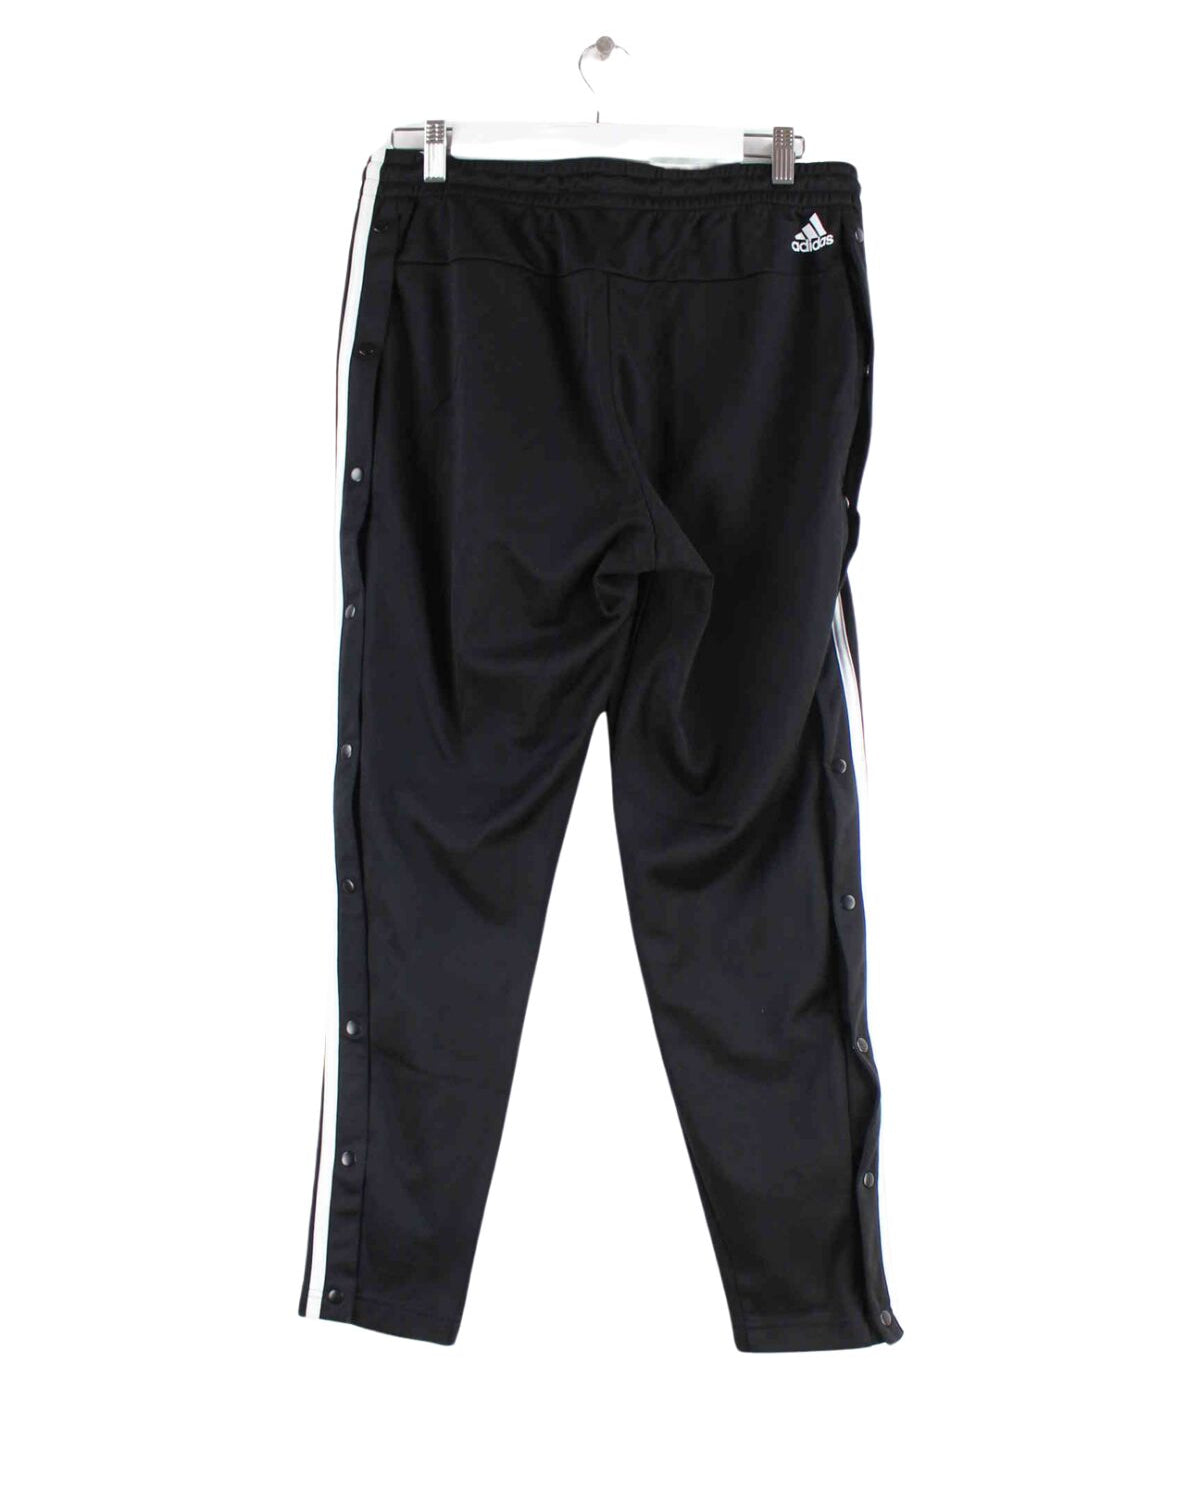 Adidas 3-Stripes Knopf Track Pants Schwarz S (back image)